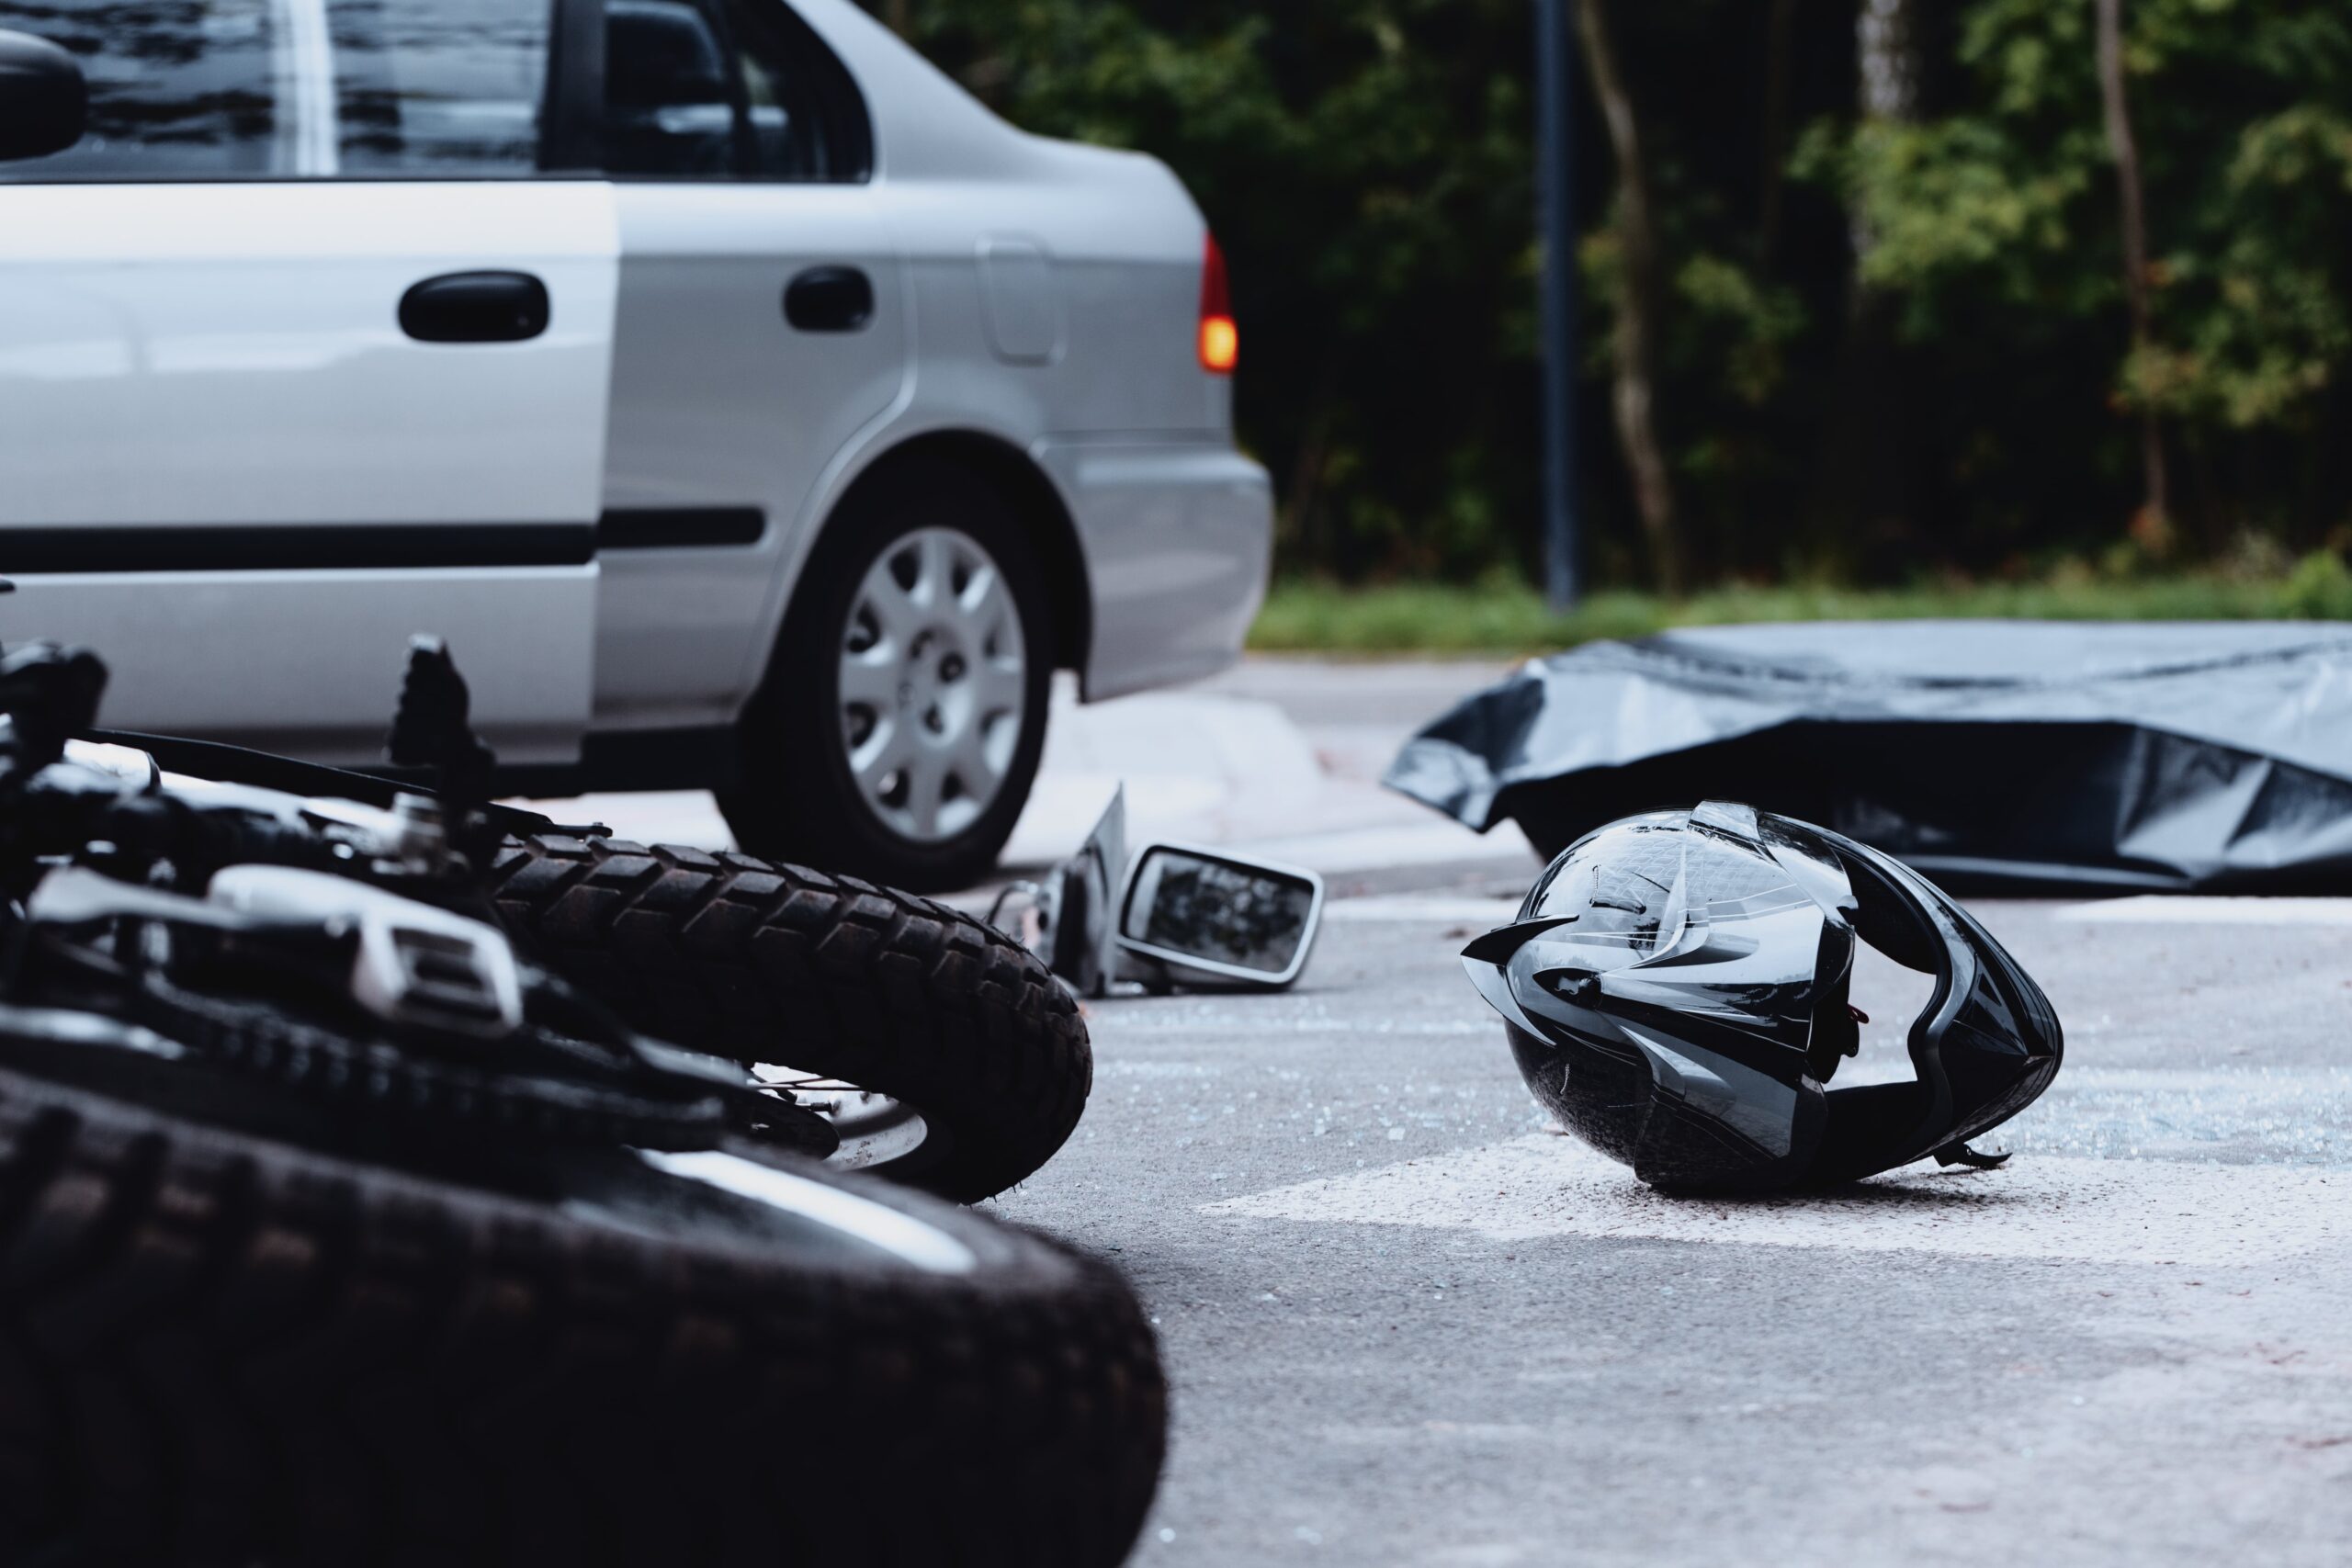 Motorcycle Accident Attorney Orlando, FL